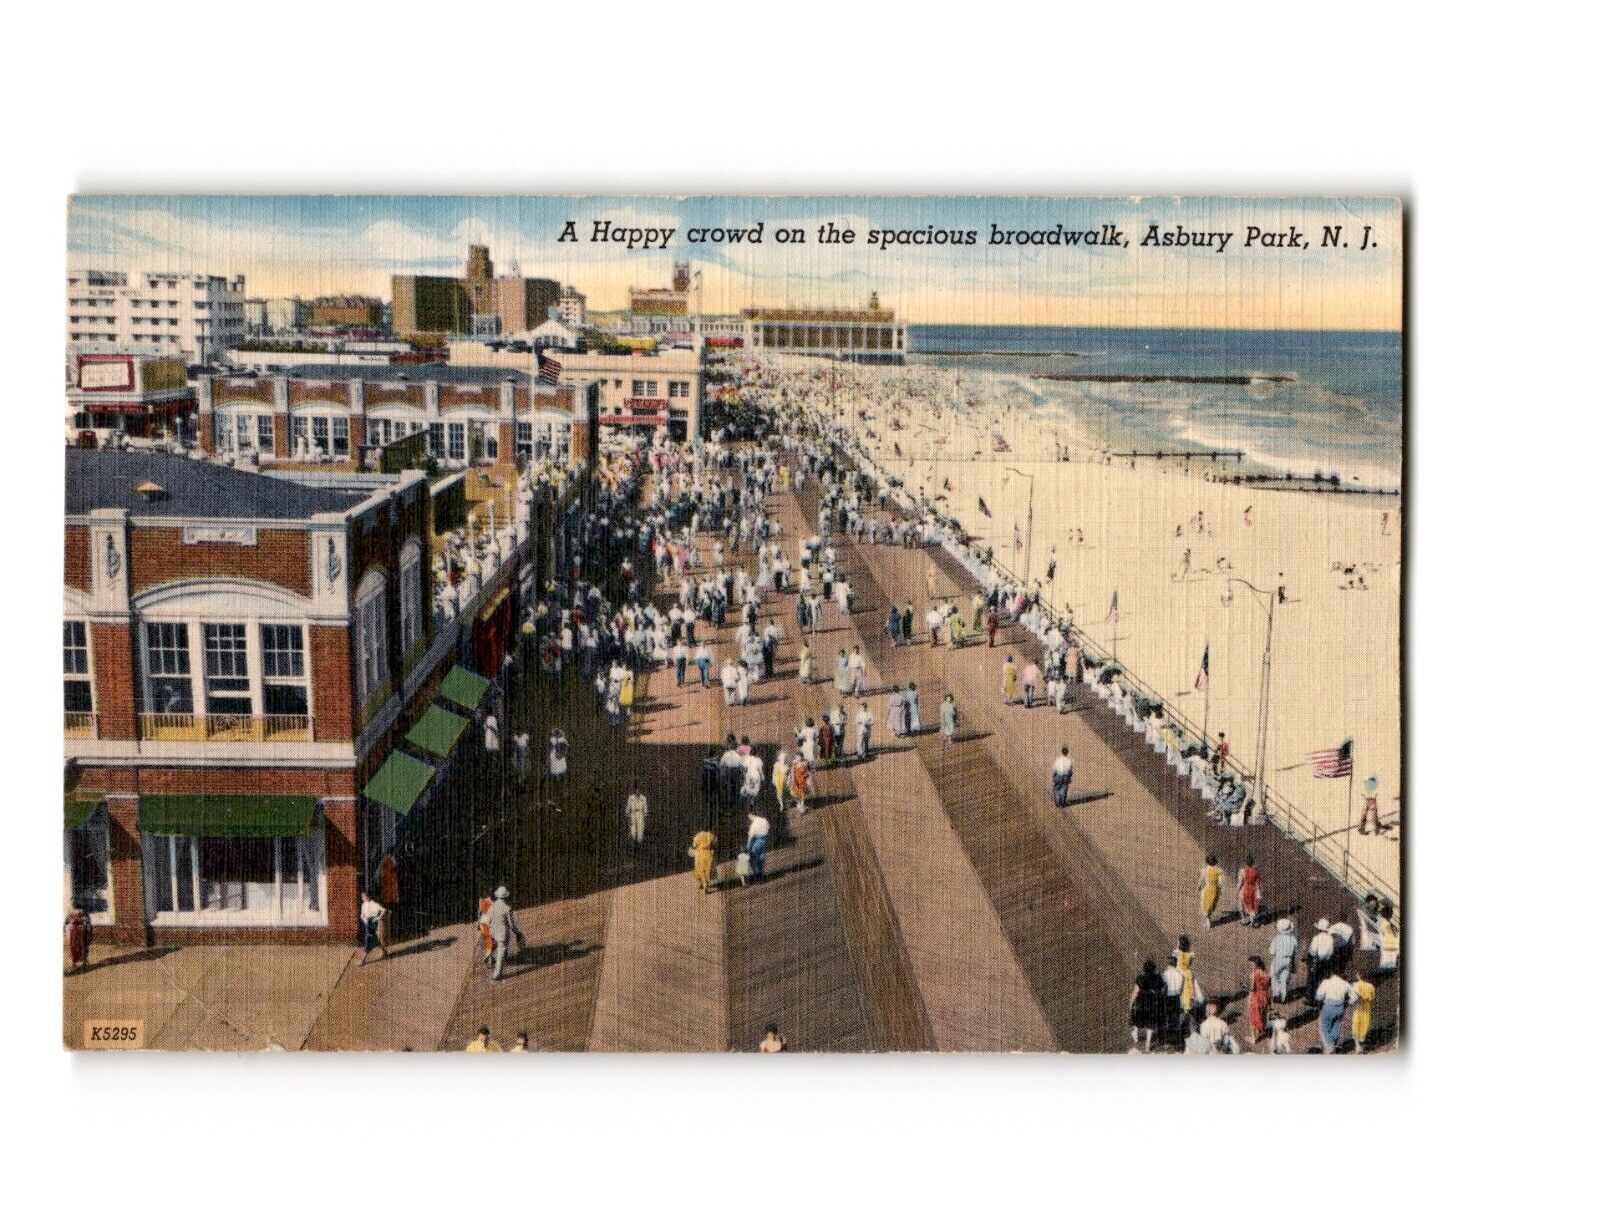 Lively Vintage Asbury Park Boardwalk Scene Postcard - Bustling Beach Crowd